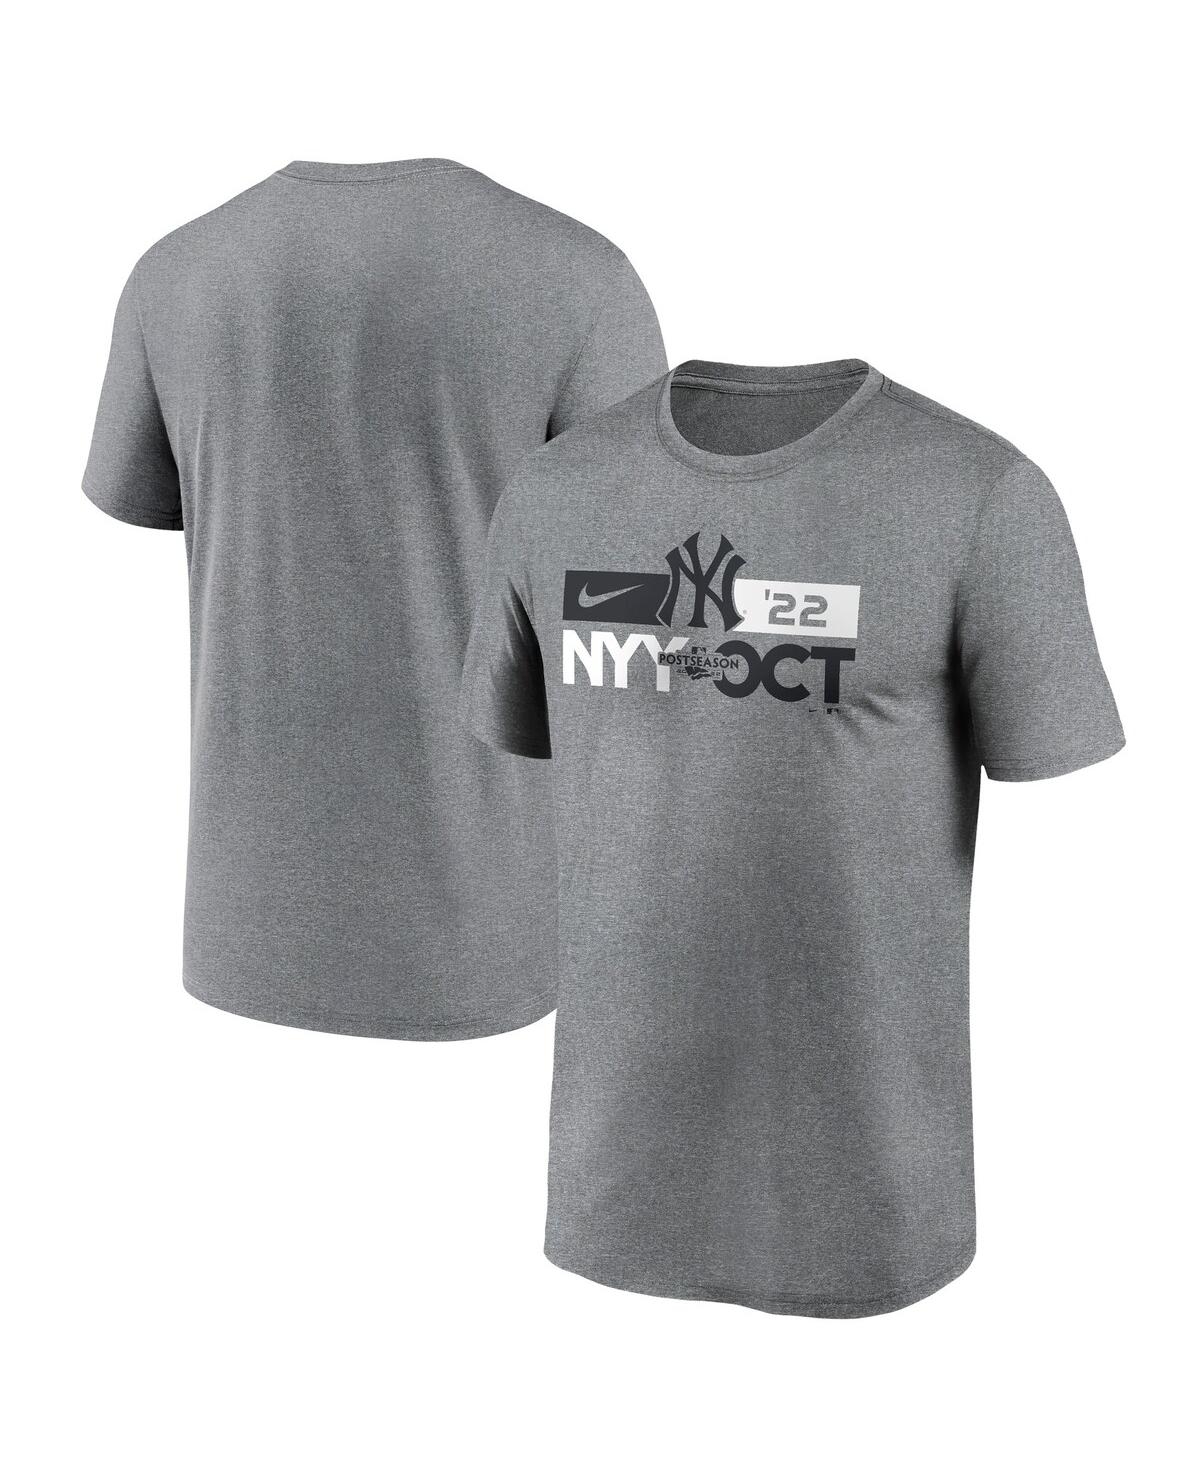 Men's Nike Heather Charcoal New York Yankees 2022 Postseason T-shirt